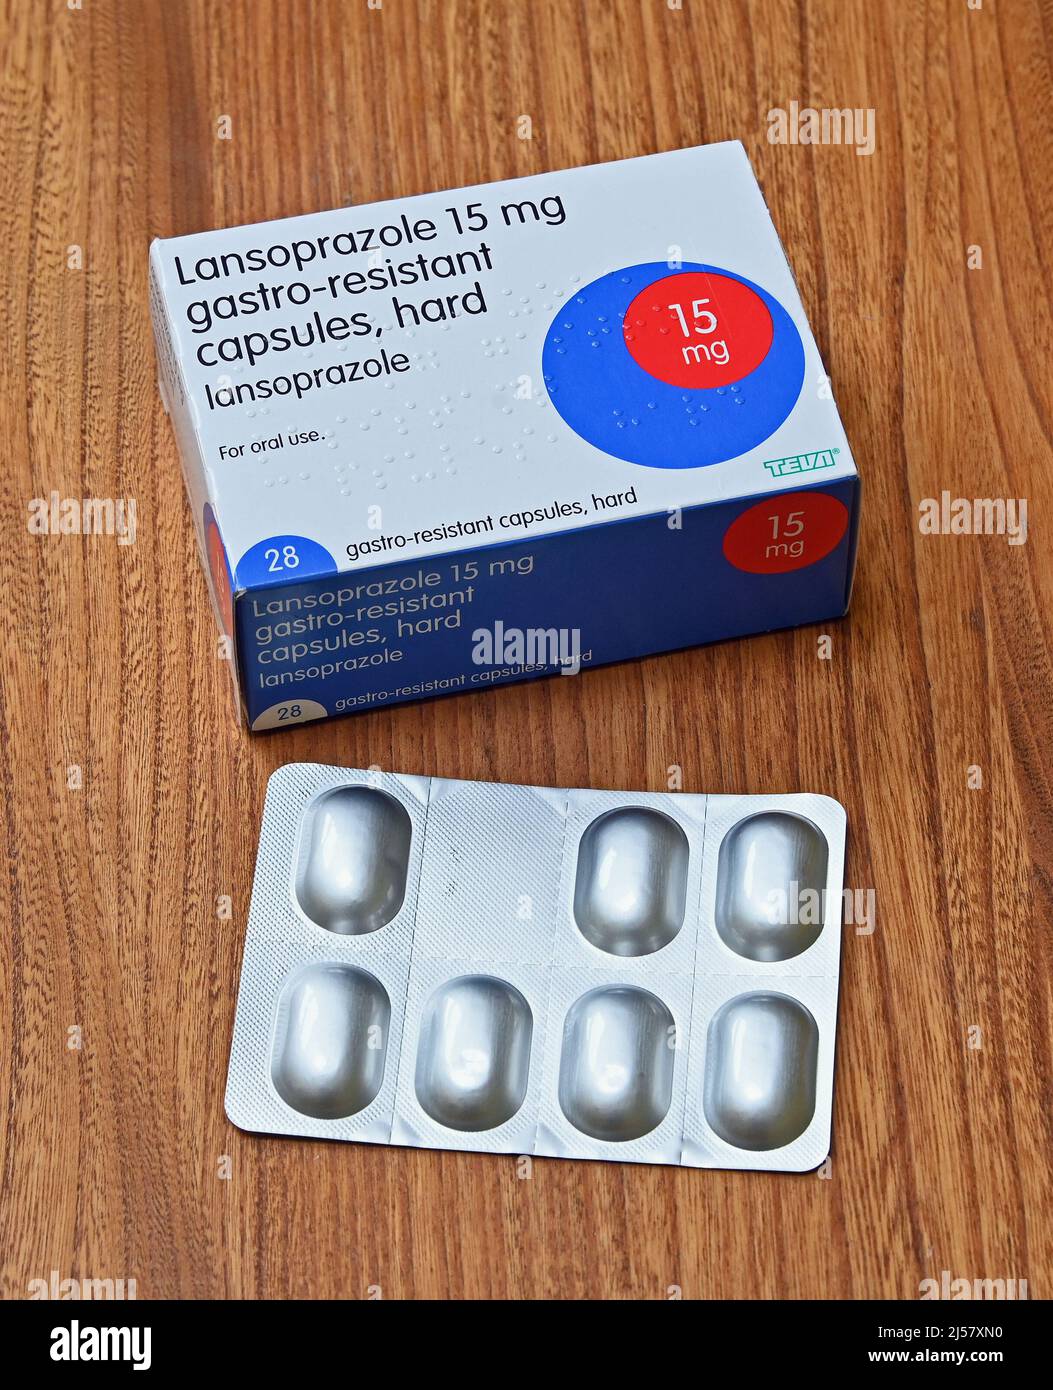 vandring fest konstant Pack of Lansoprazole 15 mg gastro-resistant capsules, hard lansoprazole.  For oral use. Teva UK Limited Stock Photo - Alamy